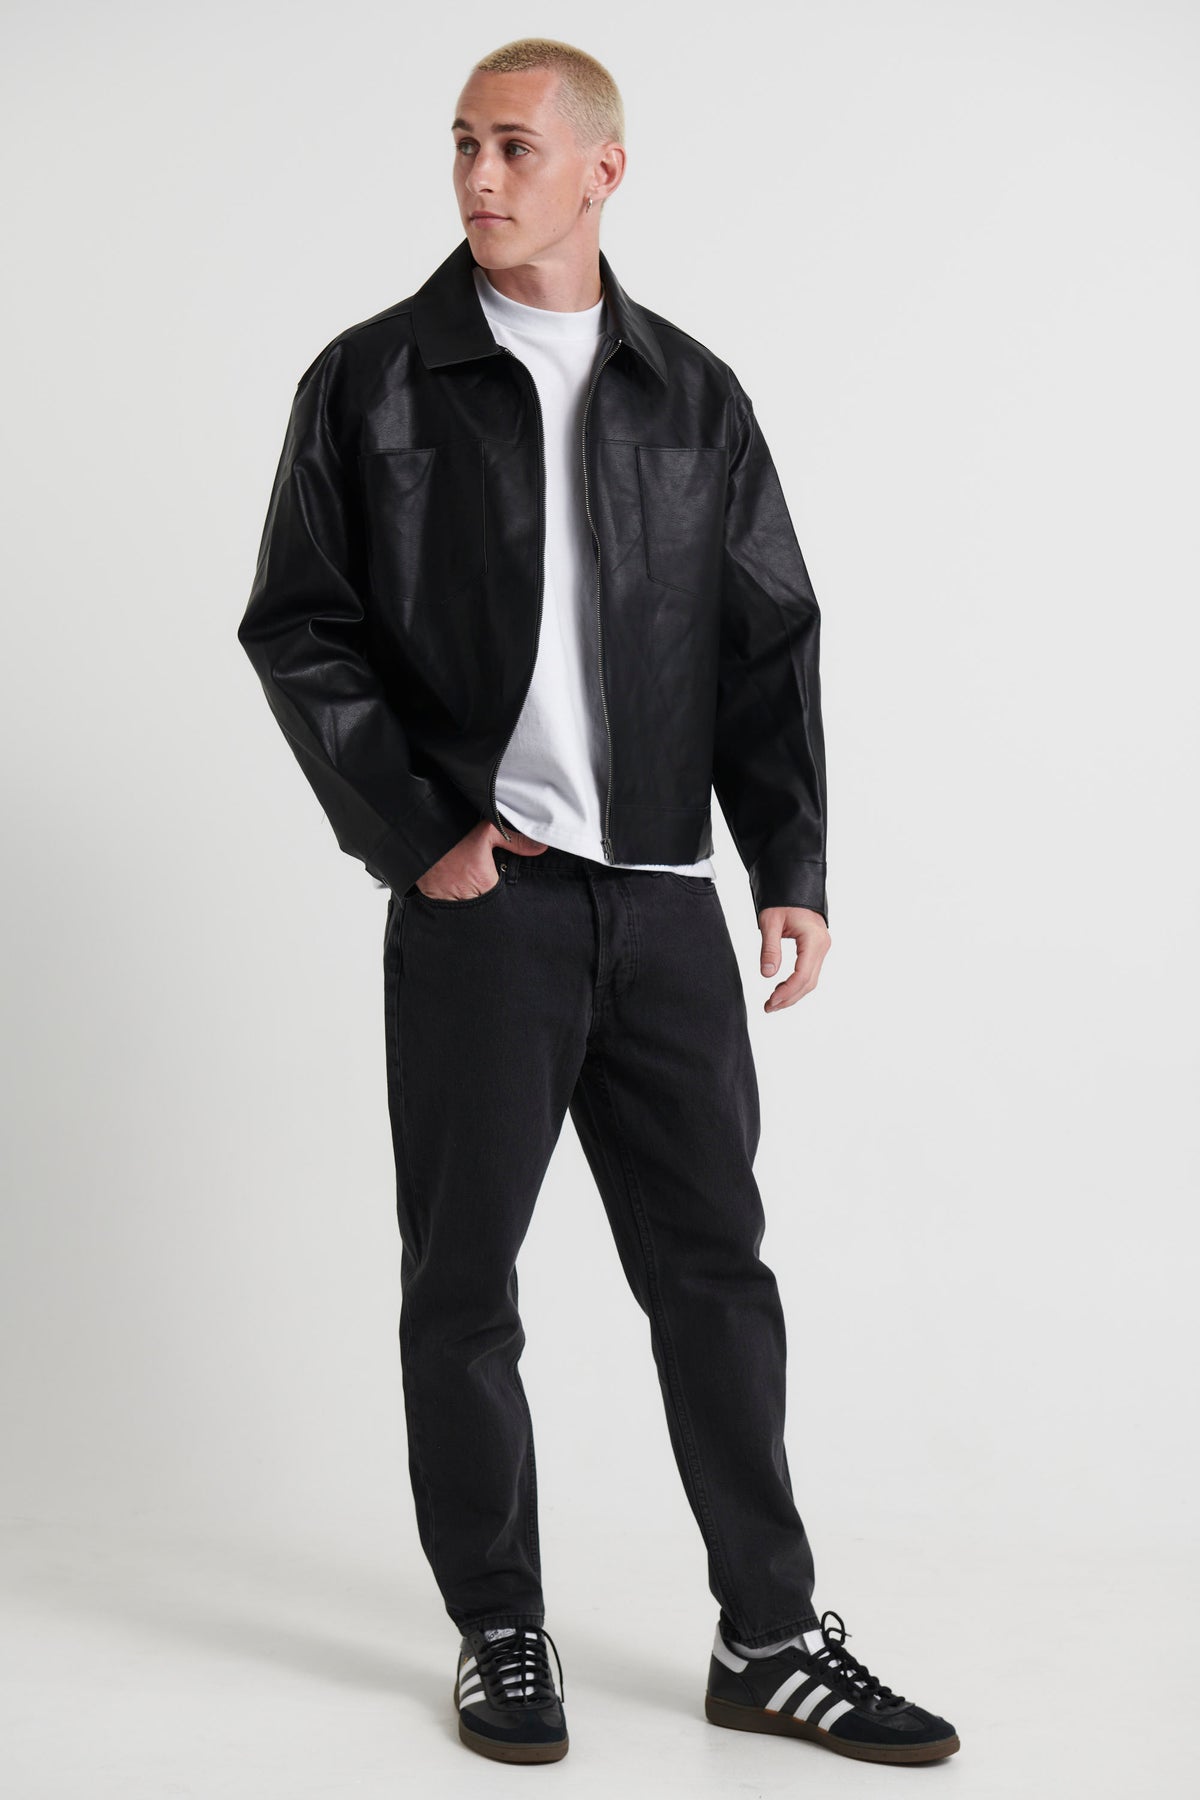 Vegan Leather Jacket Black - FINAL SALE